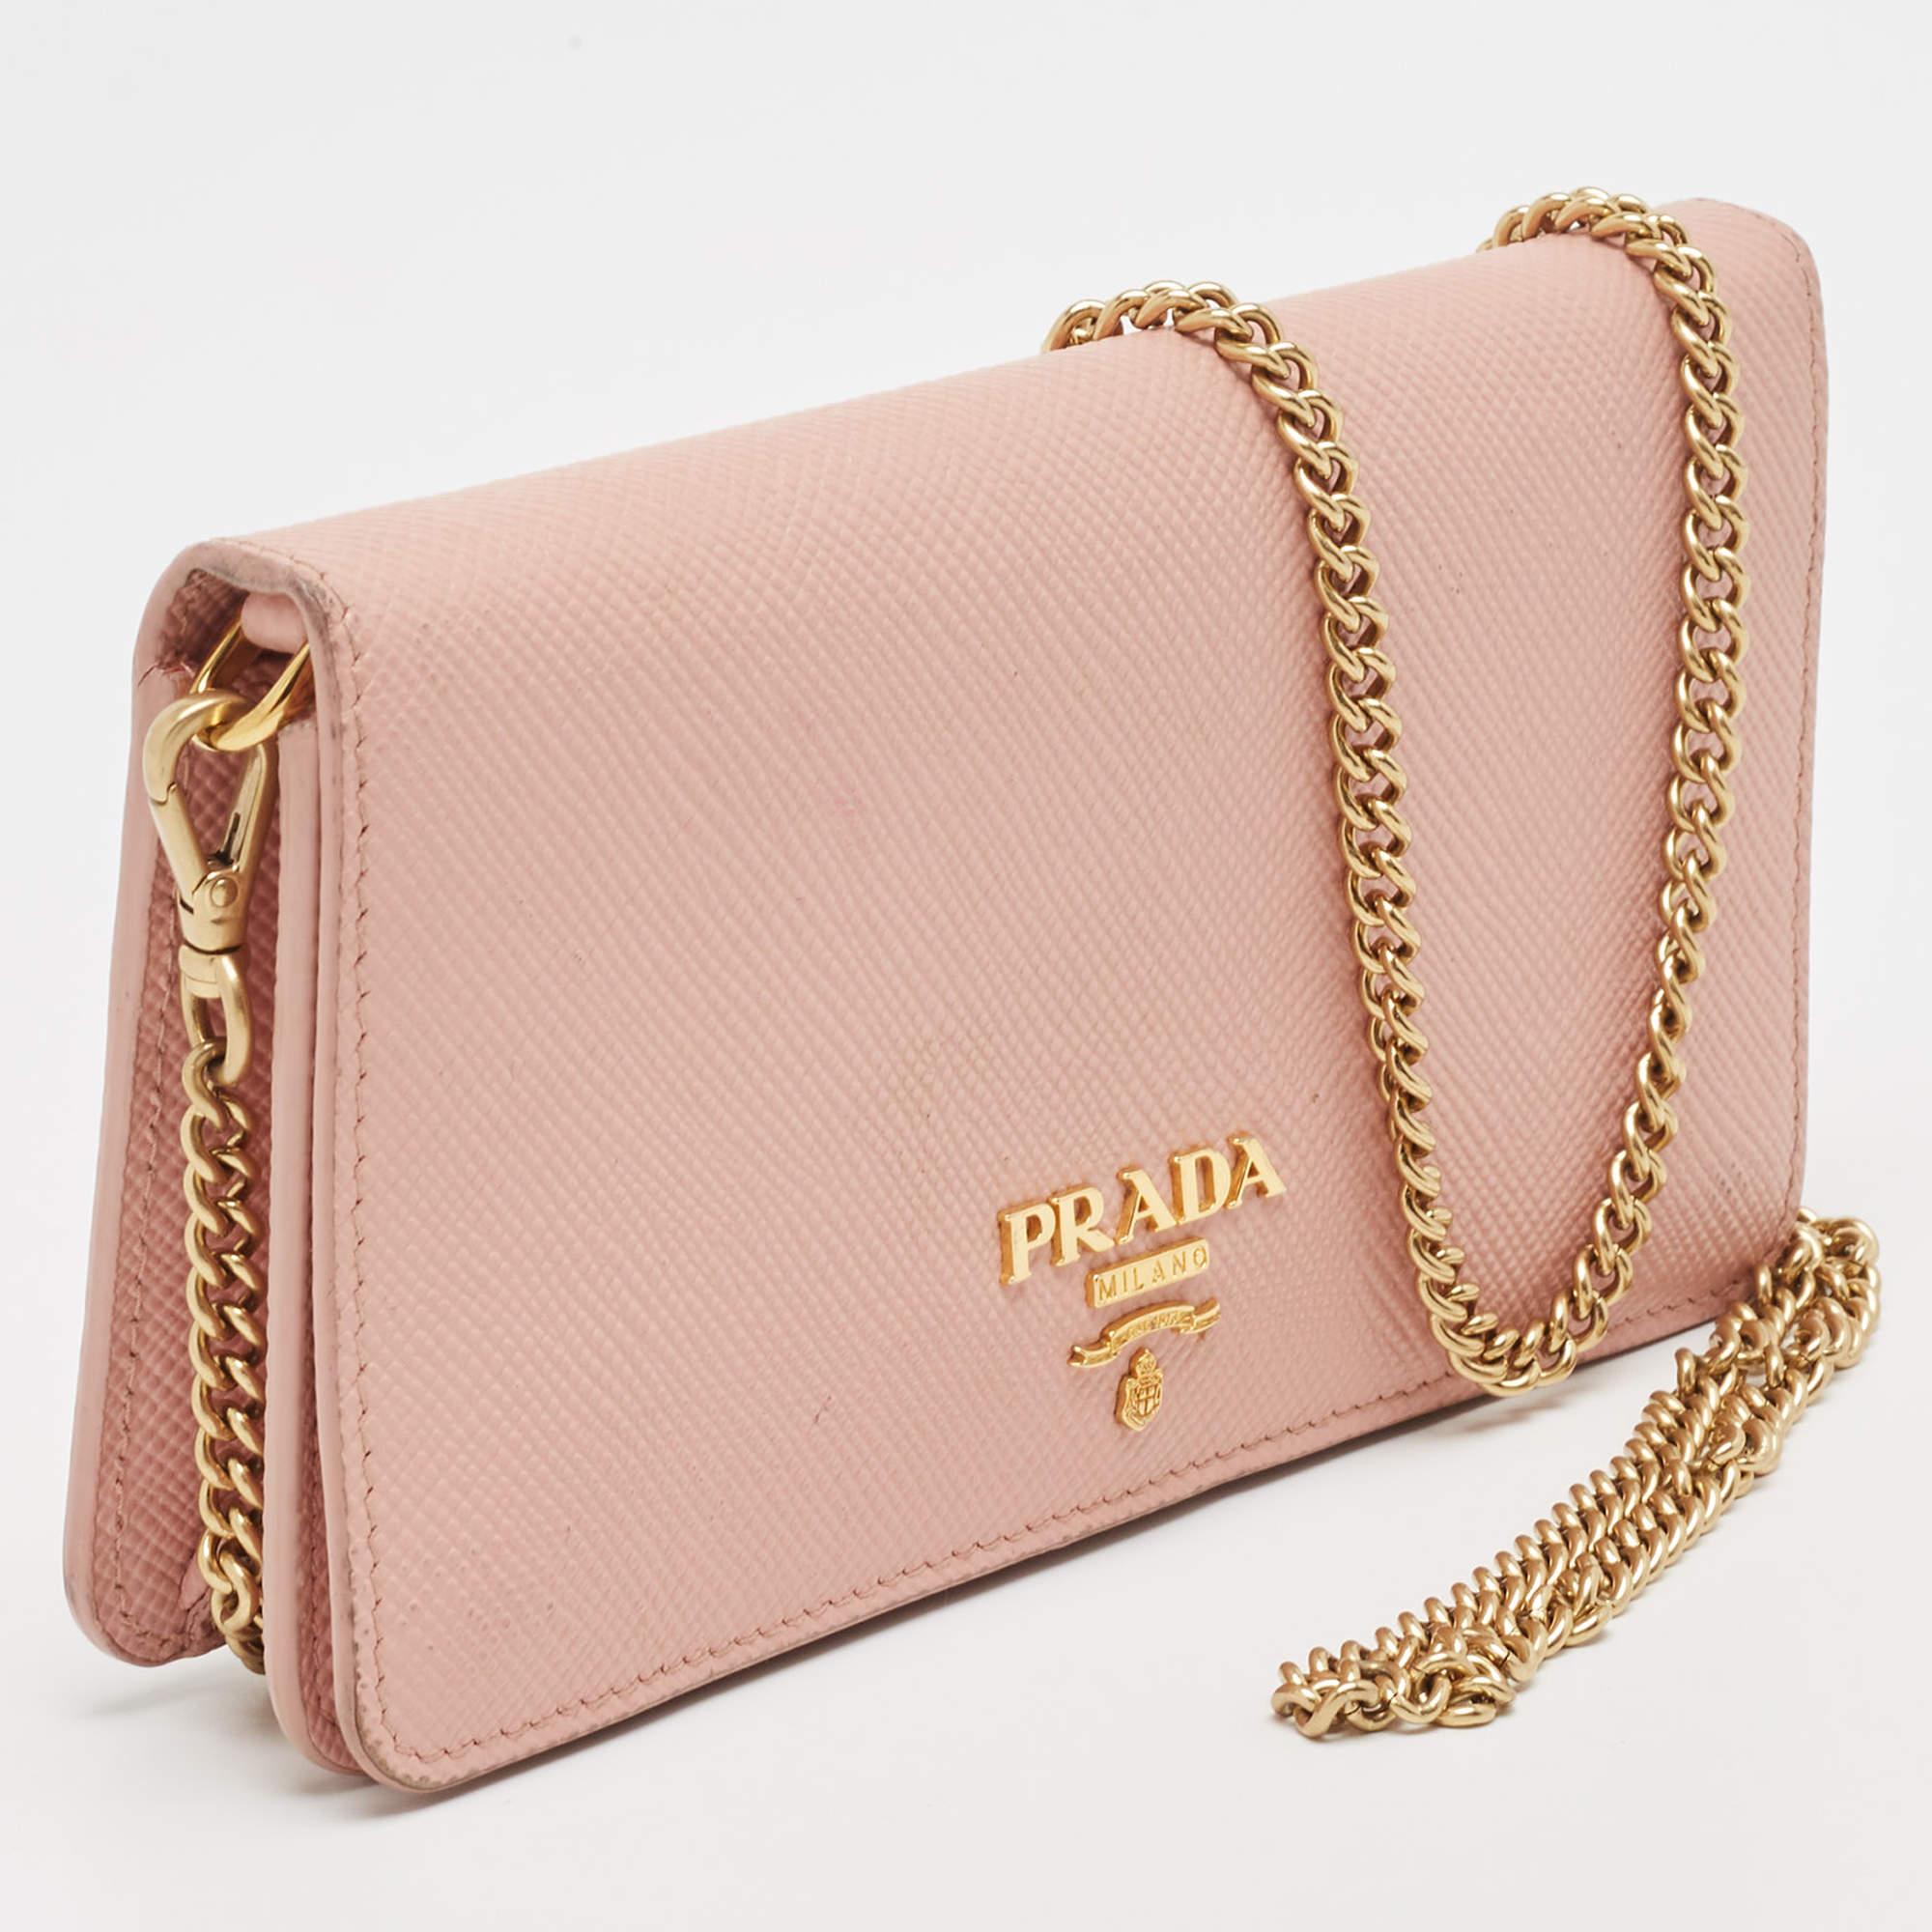 LeatherPrada Pink Saffiano Cuir Leather Wallet On Chain 6